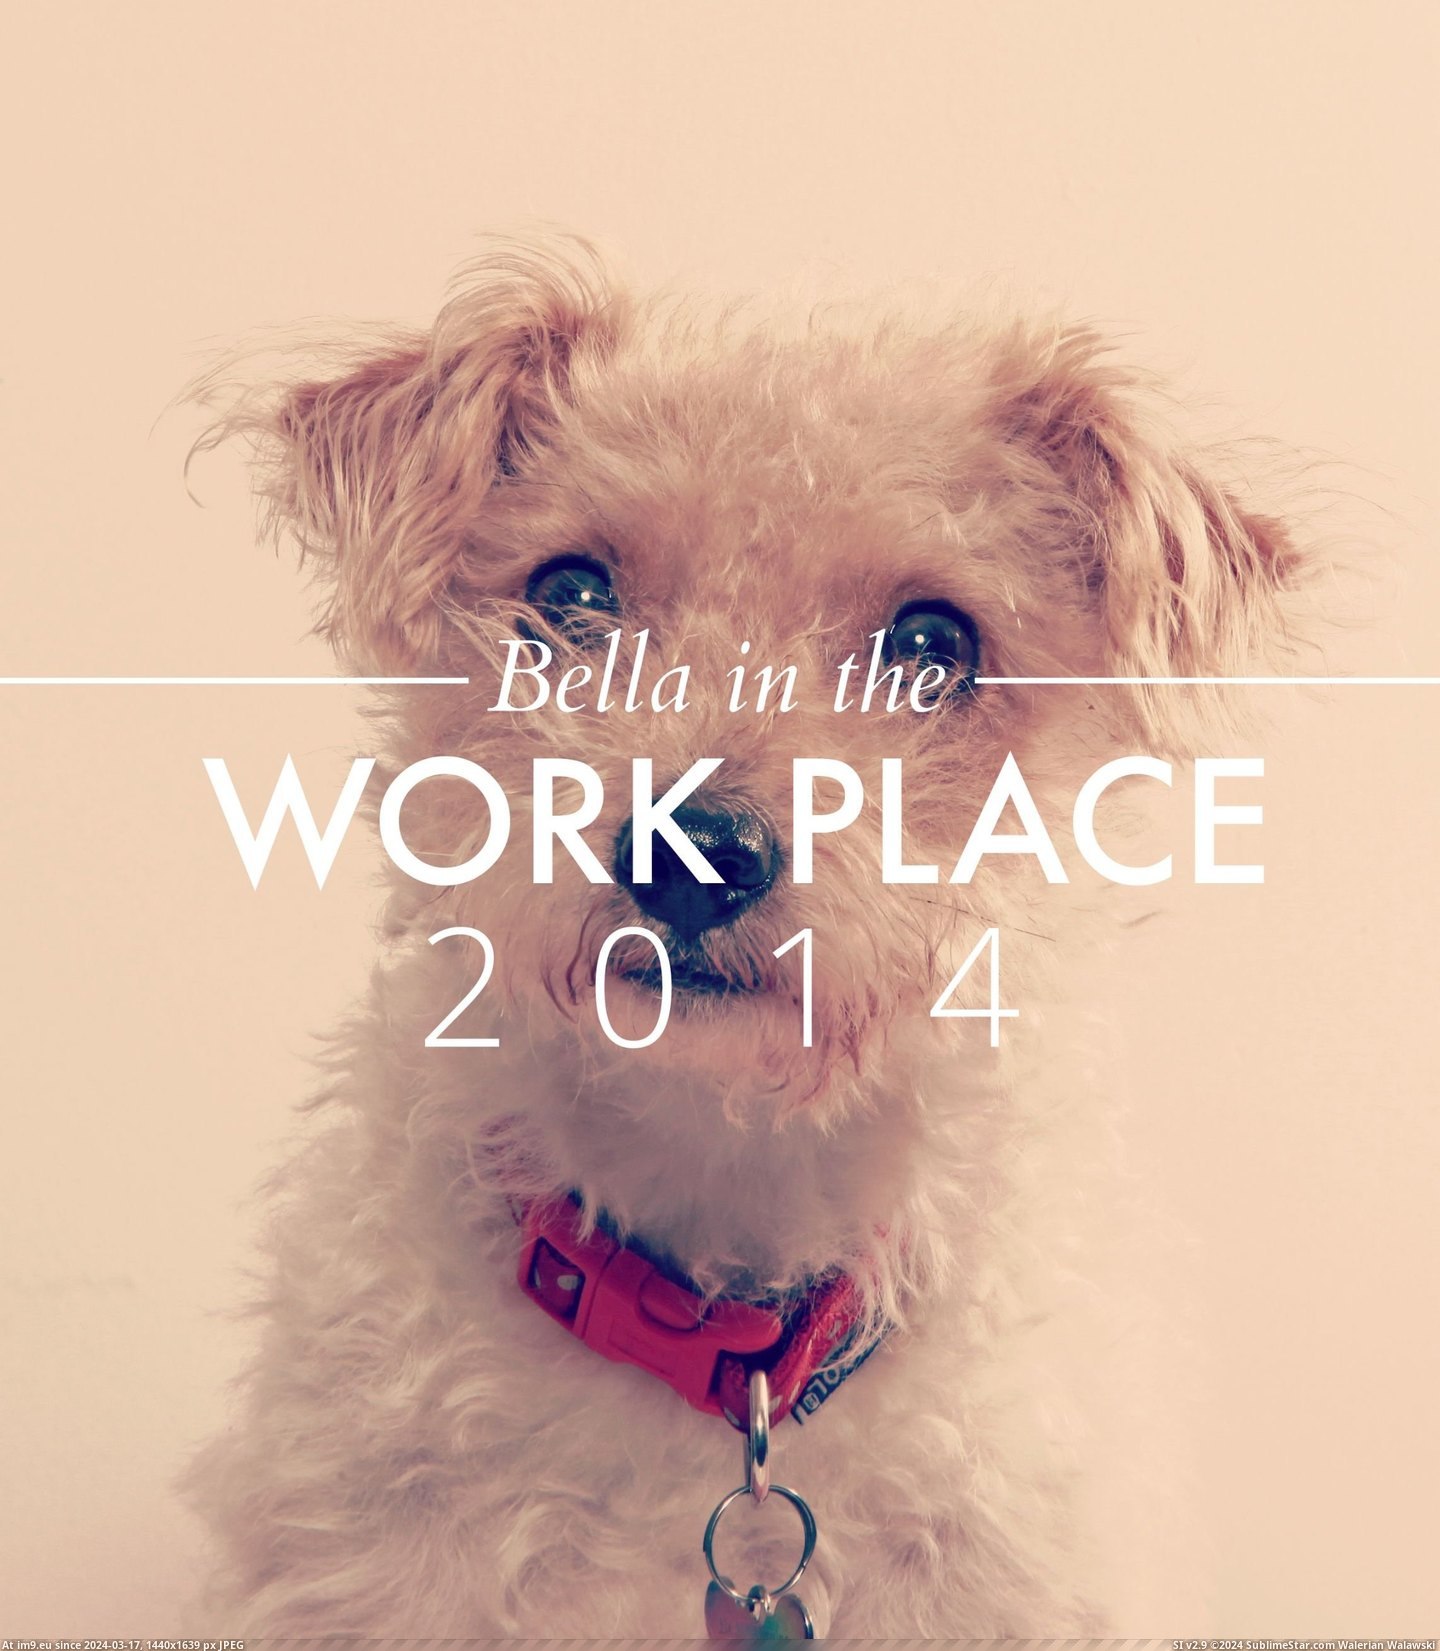 #For #Year #Dog #Calendar #Bella #Workplace #Christmas #Family #Called [Aww] Every Christmas I make a calendar of my dog for my family. This year's calendar is called 'Bella in the Workplace 2014'. I Pic. (Bild von album My r/AWW favs))